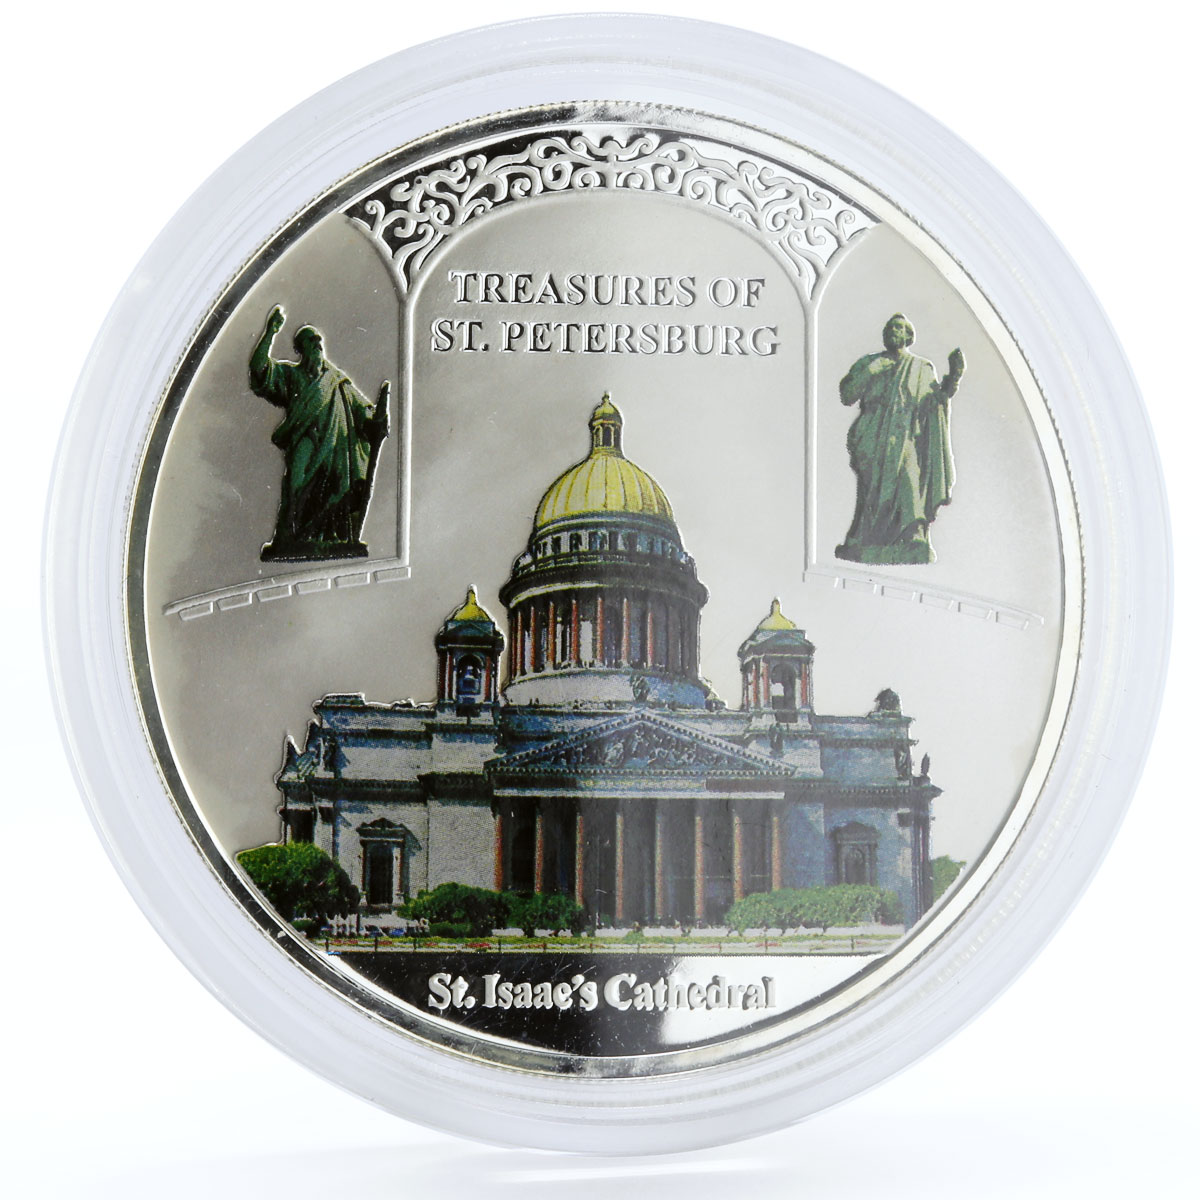 Malawi 20 kwacha Treasures of St Petersburg St Isaac Cathedral silver coin 2009